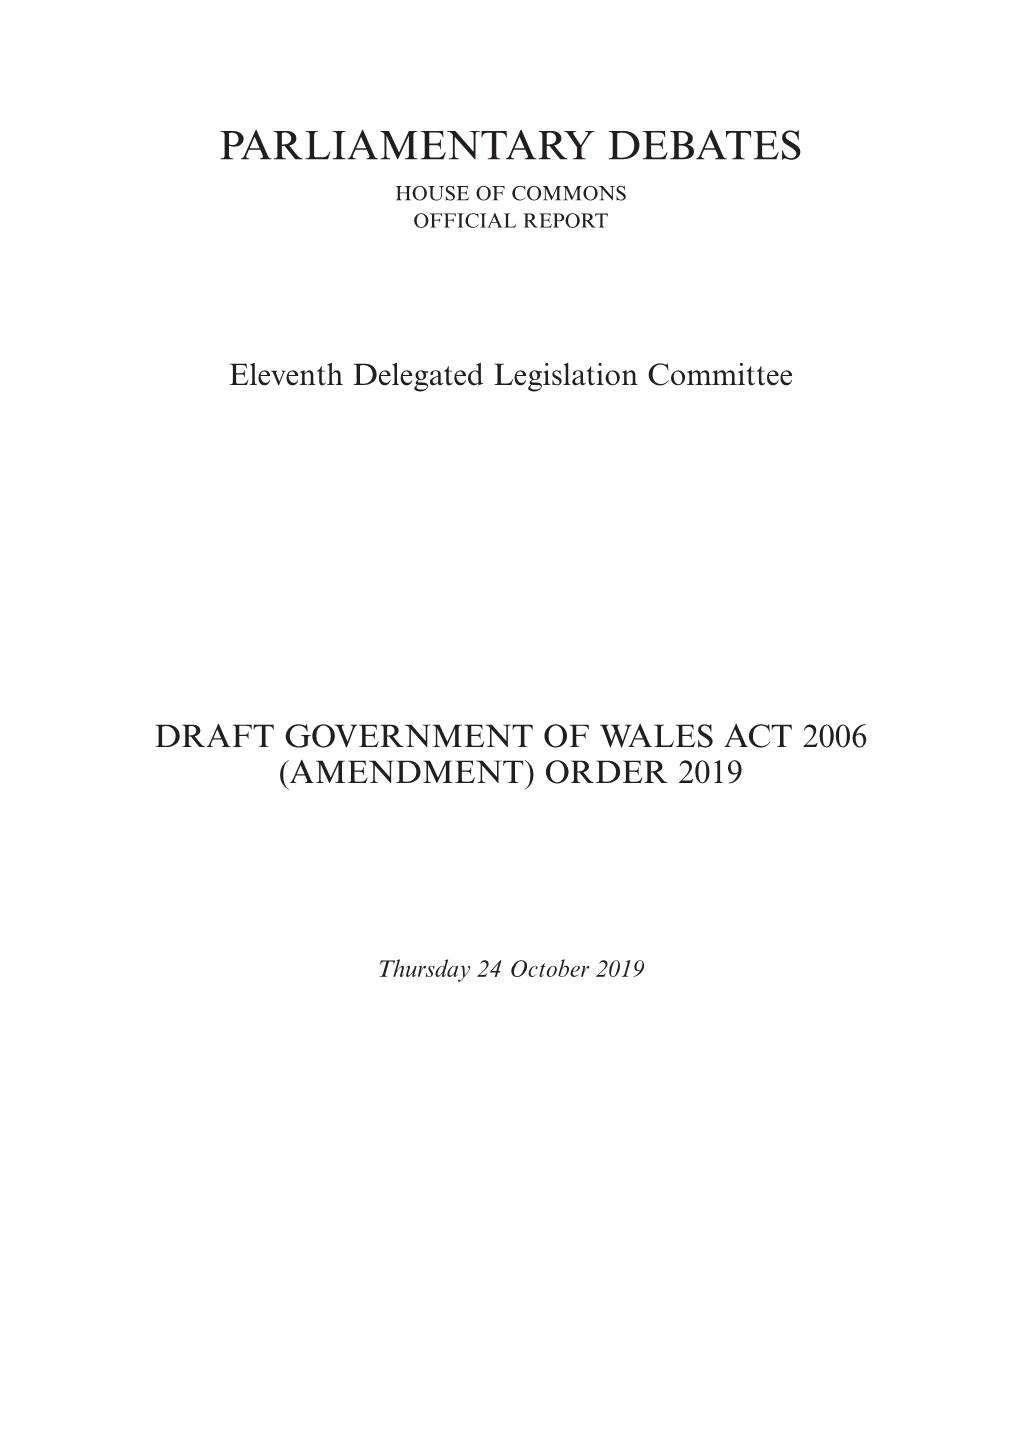 Draft Government of Wales Act 2006 (Amendment) Order 2019